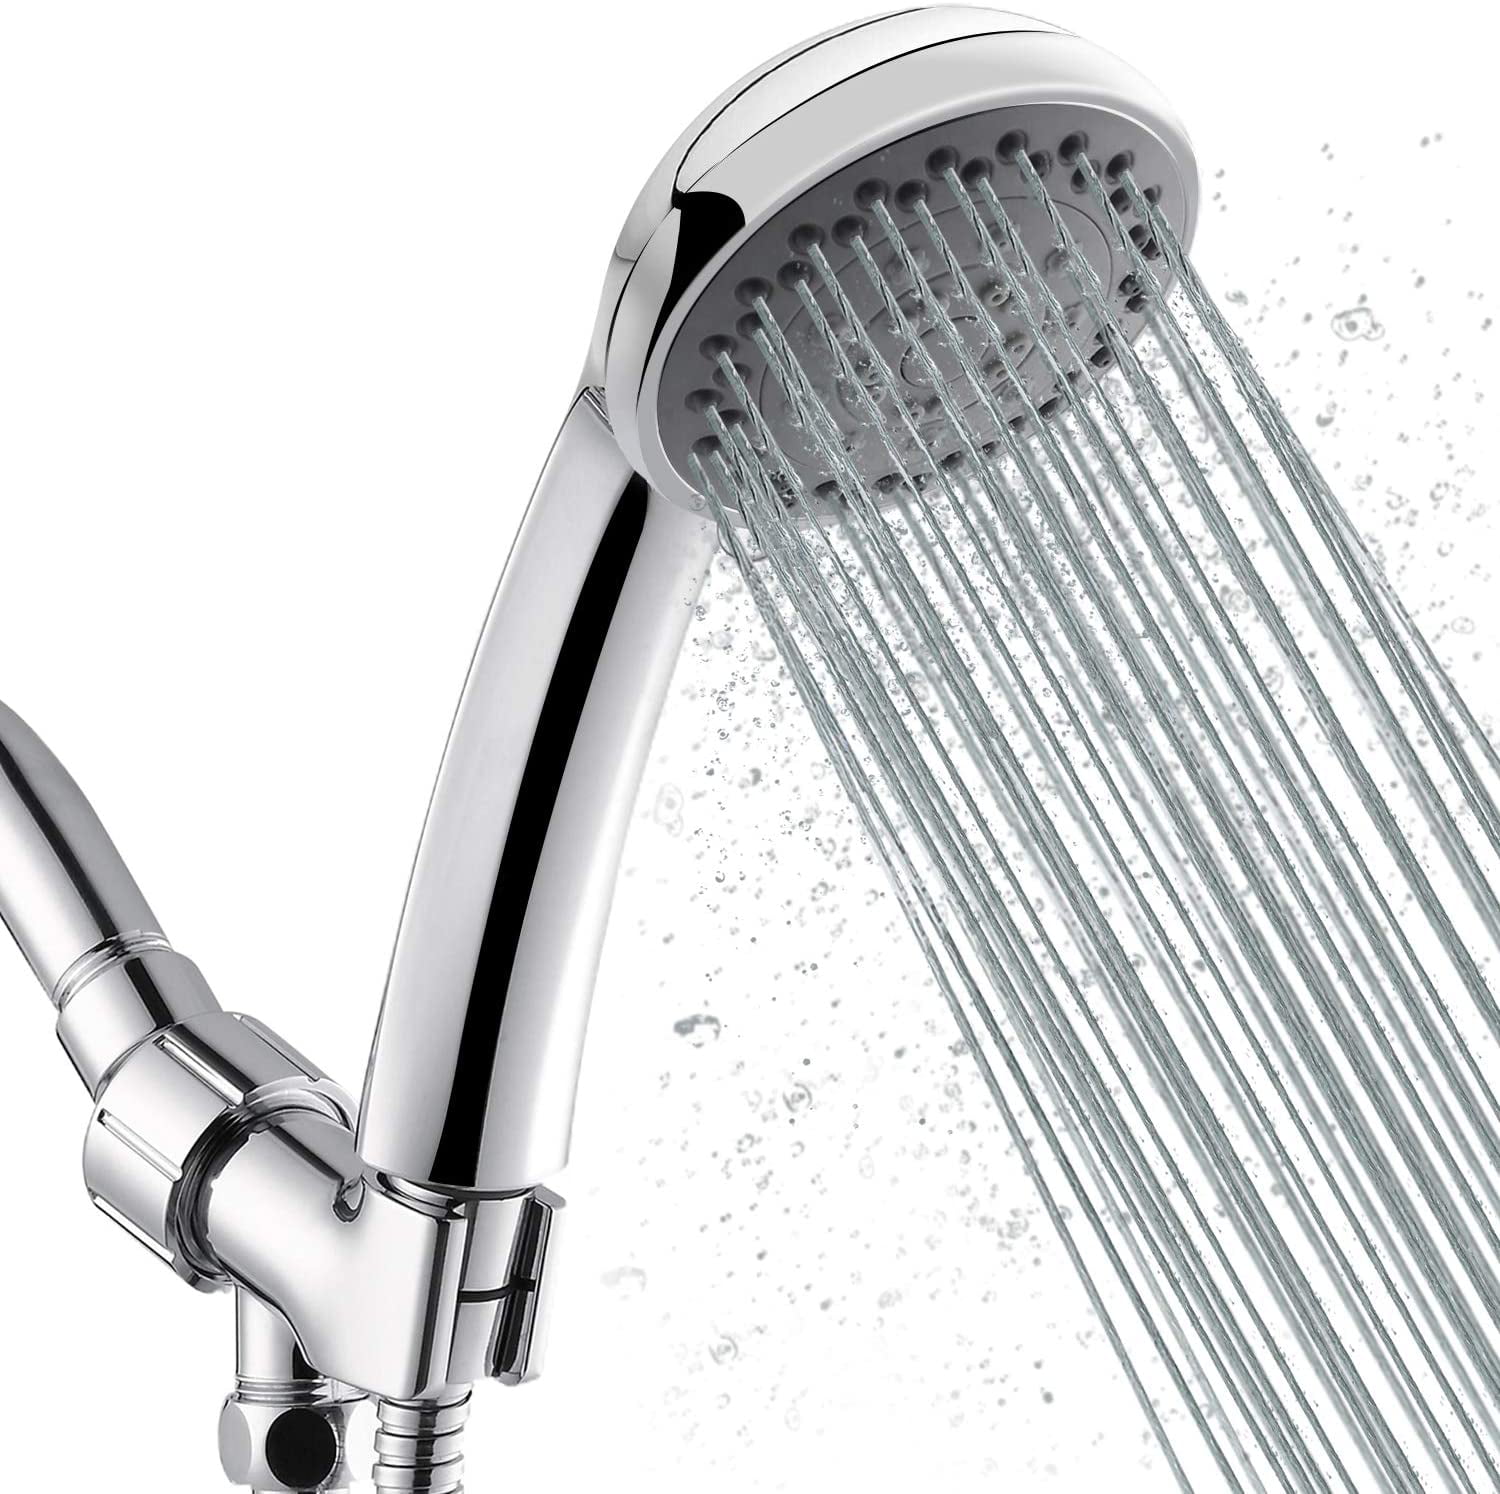 Durable Hand-held Water Bath Home Bathroom Shower Head High Pressure 5 mode New 